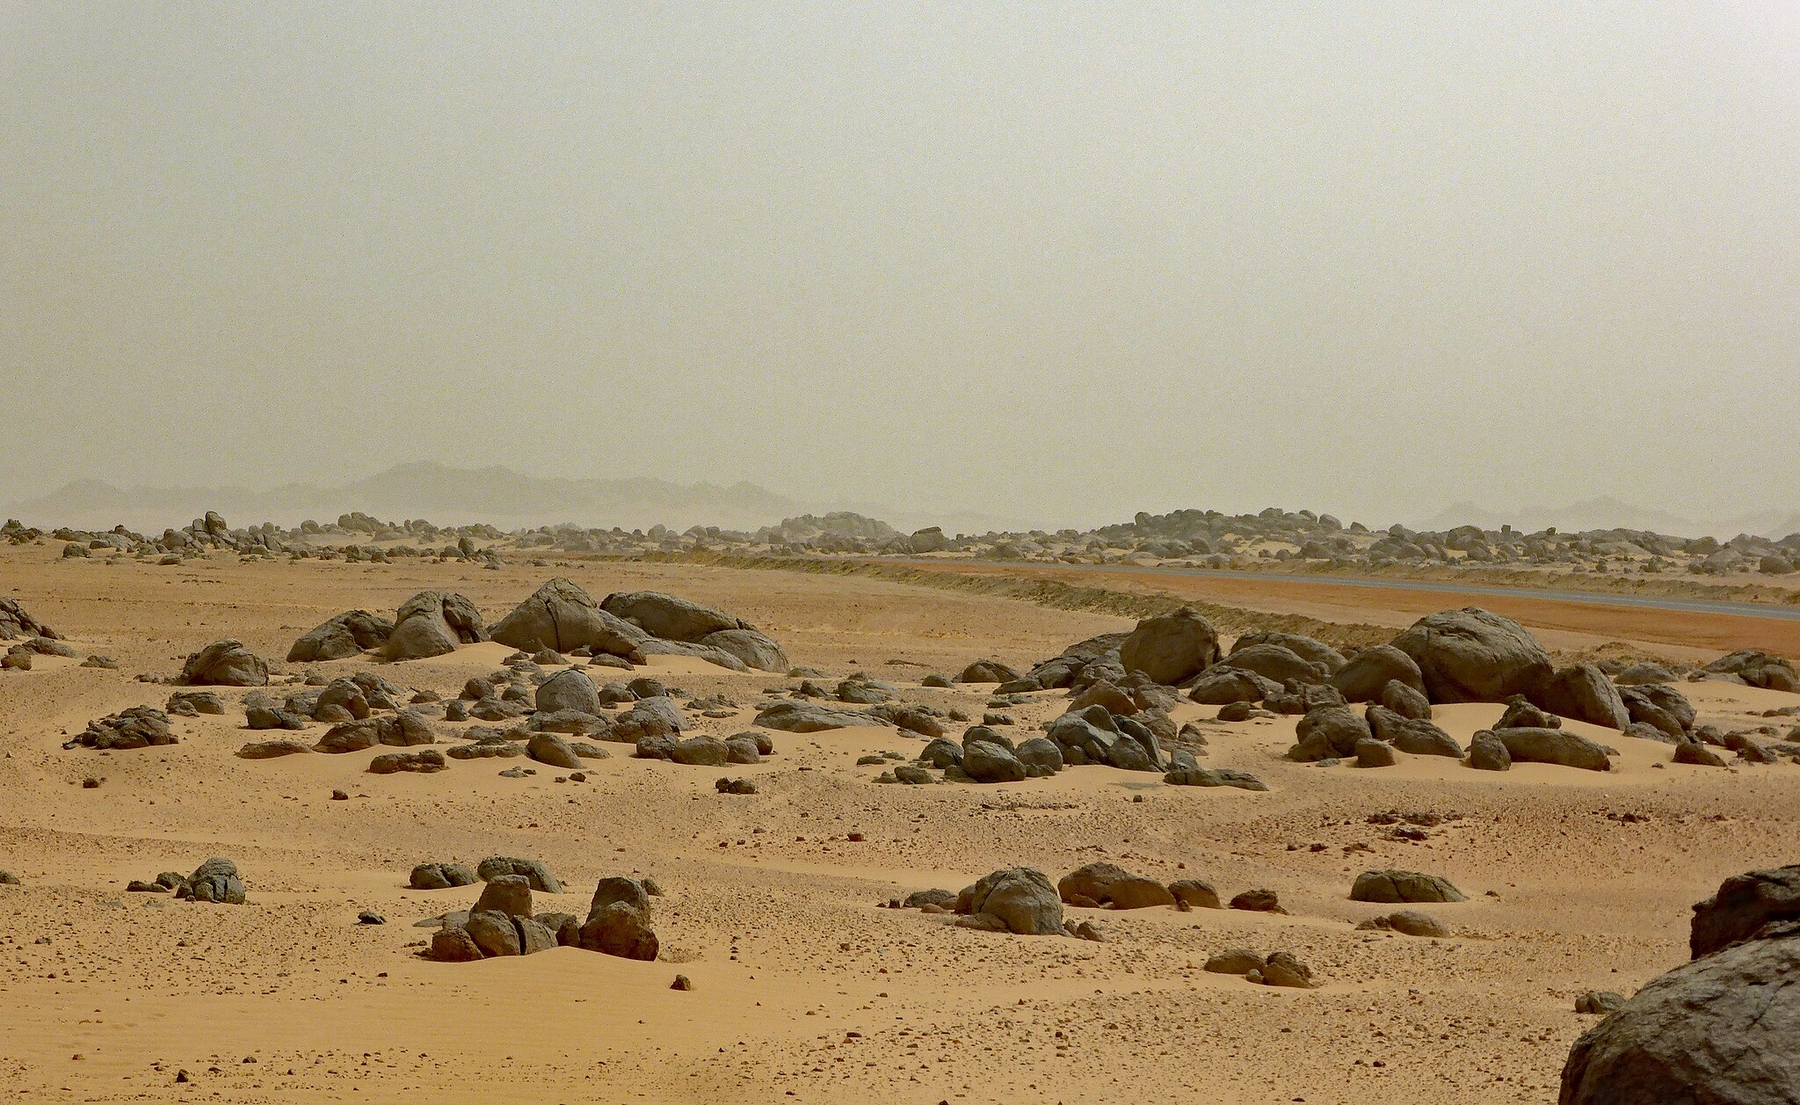 Nubian desert with sandy ground, big black rocks, and a gray sky.